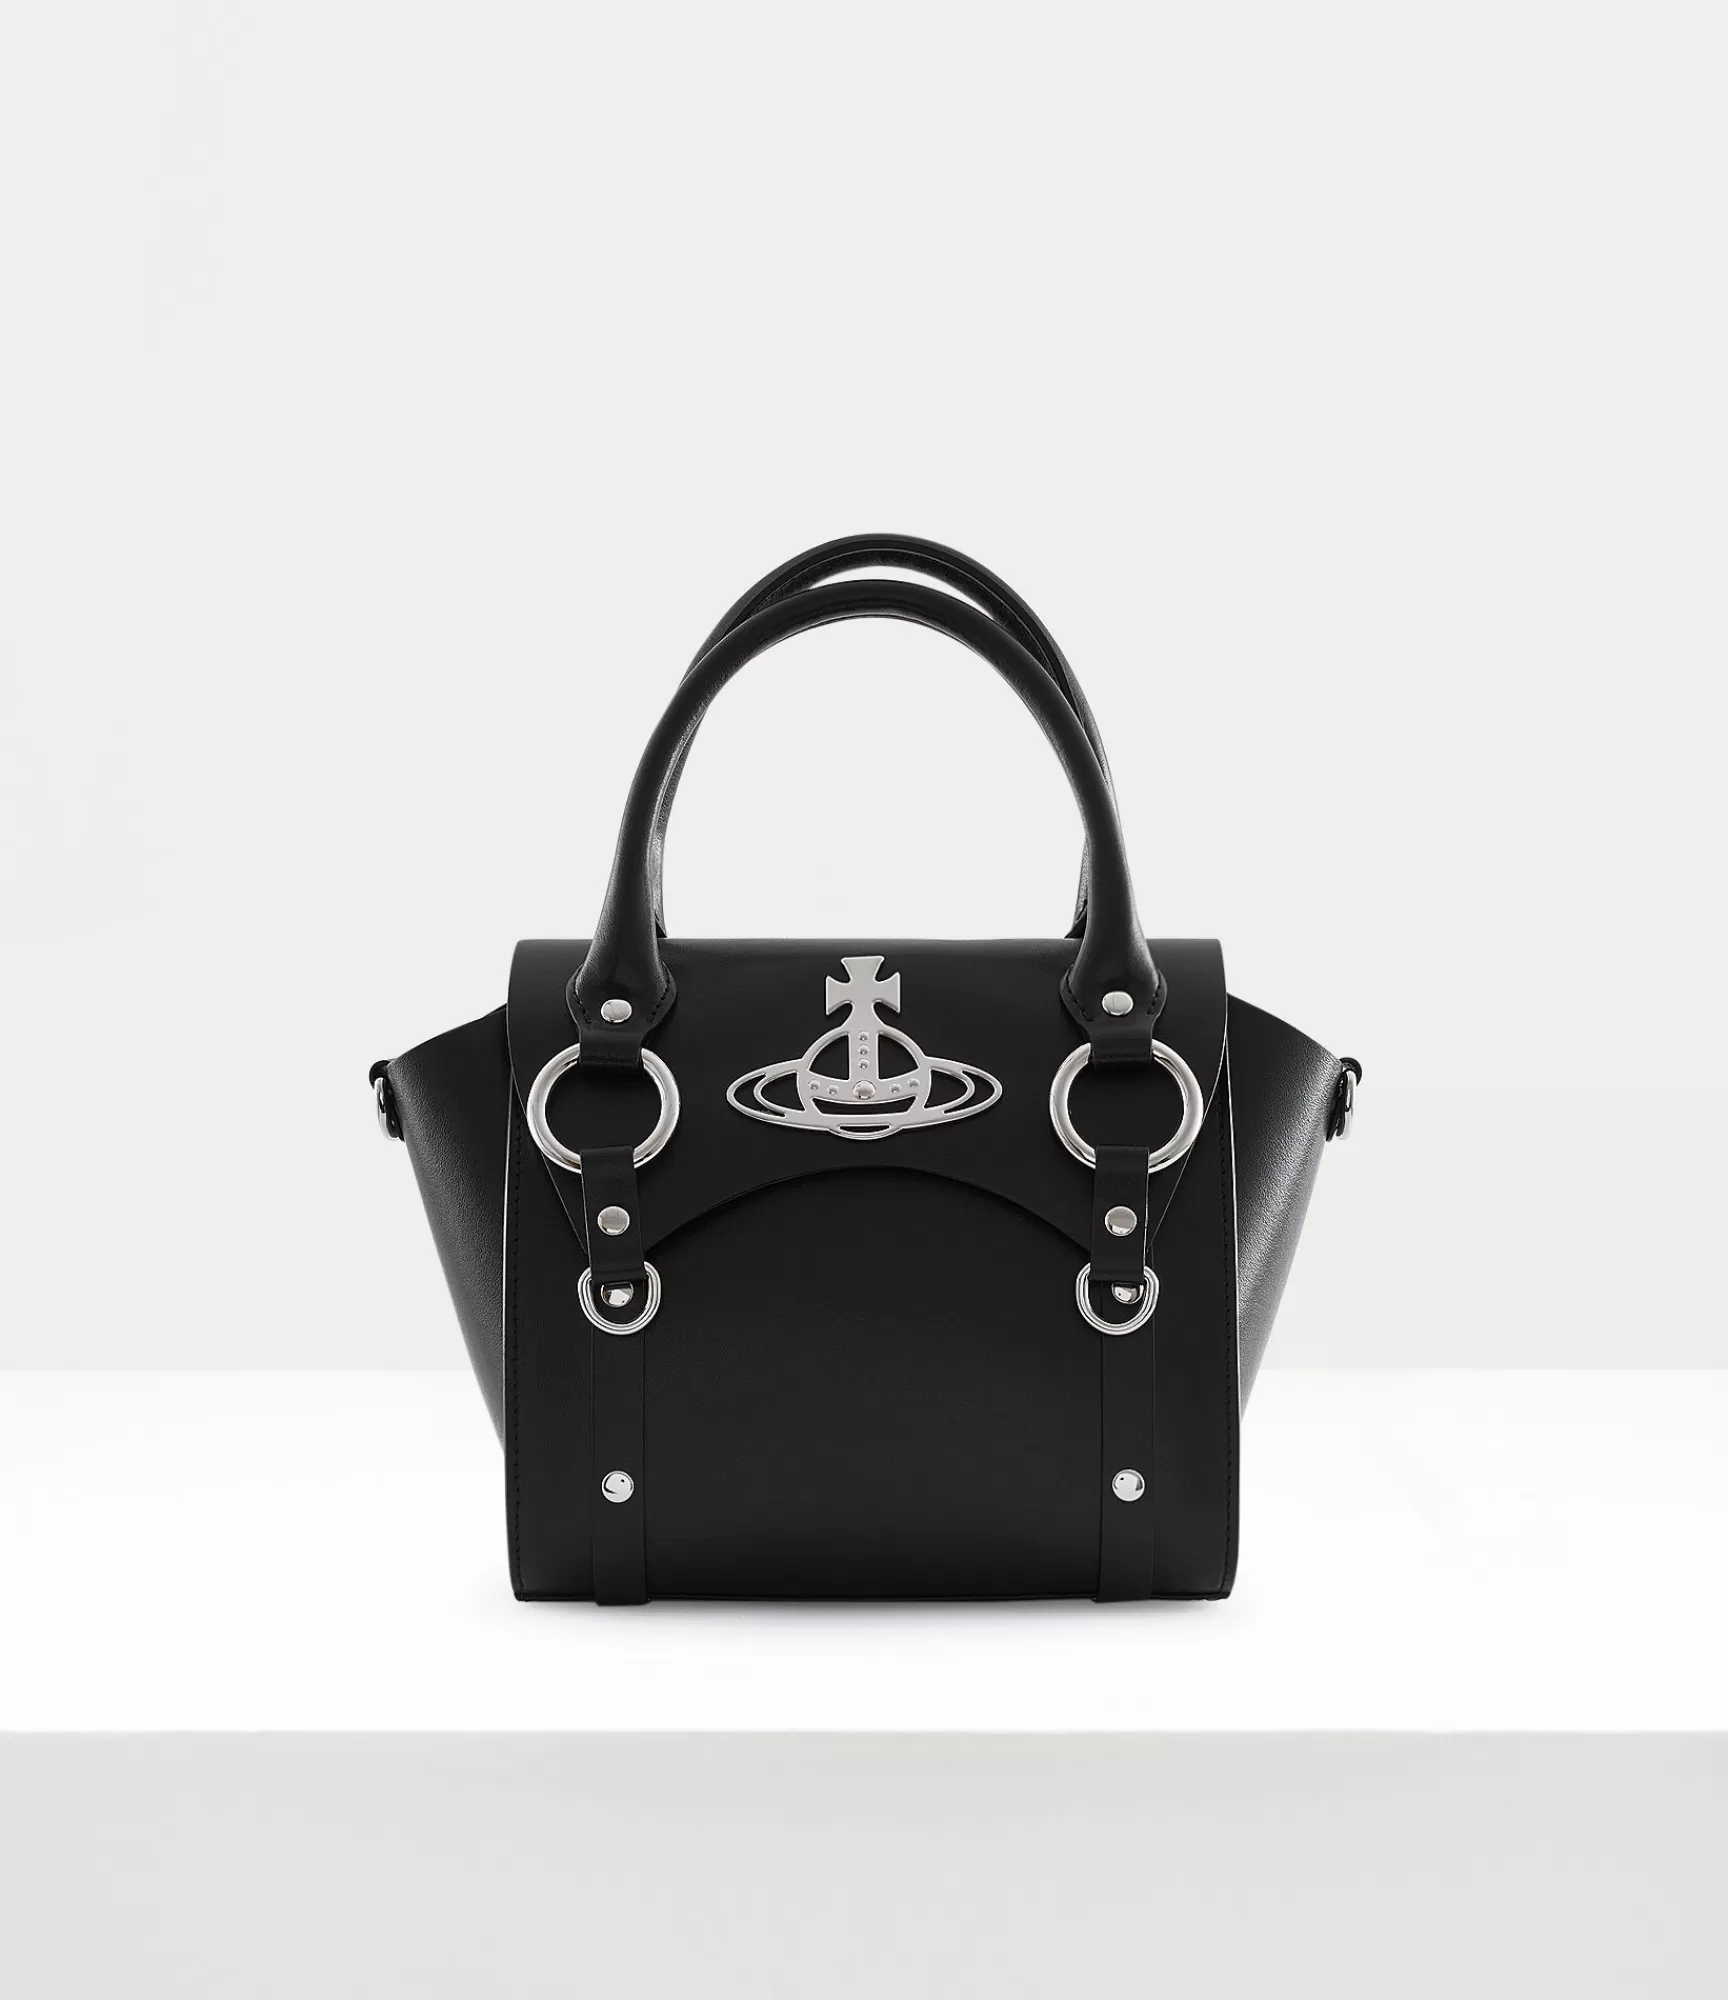 Vivienne Westwood Handbags*Small handbag Black